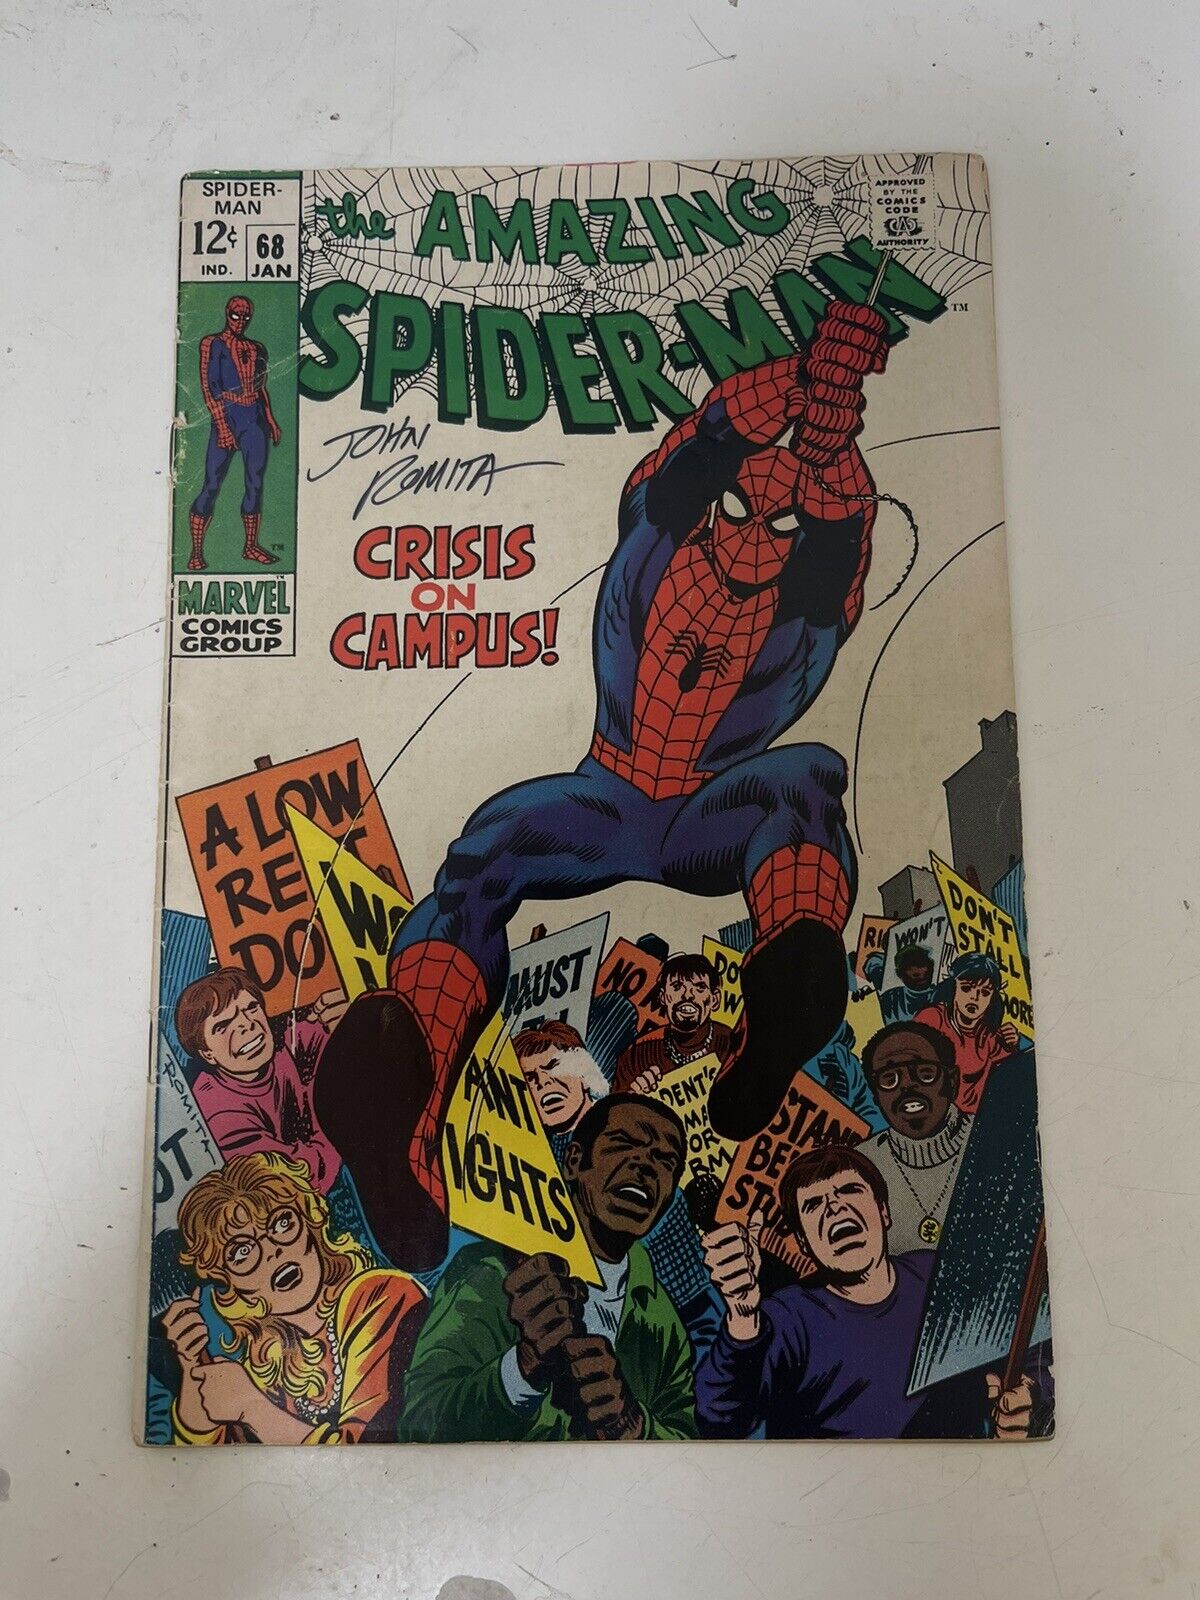 Amazing Spider-Man #68 1969 signed by John Romita